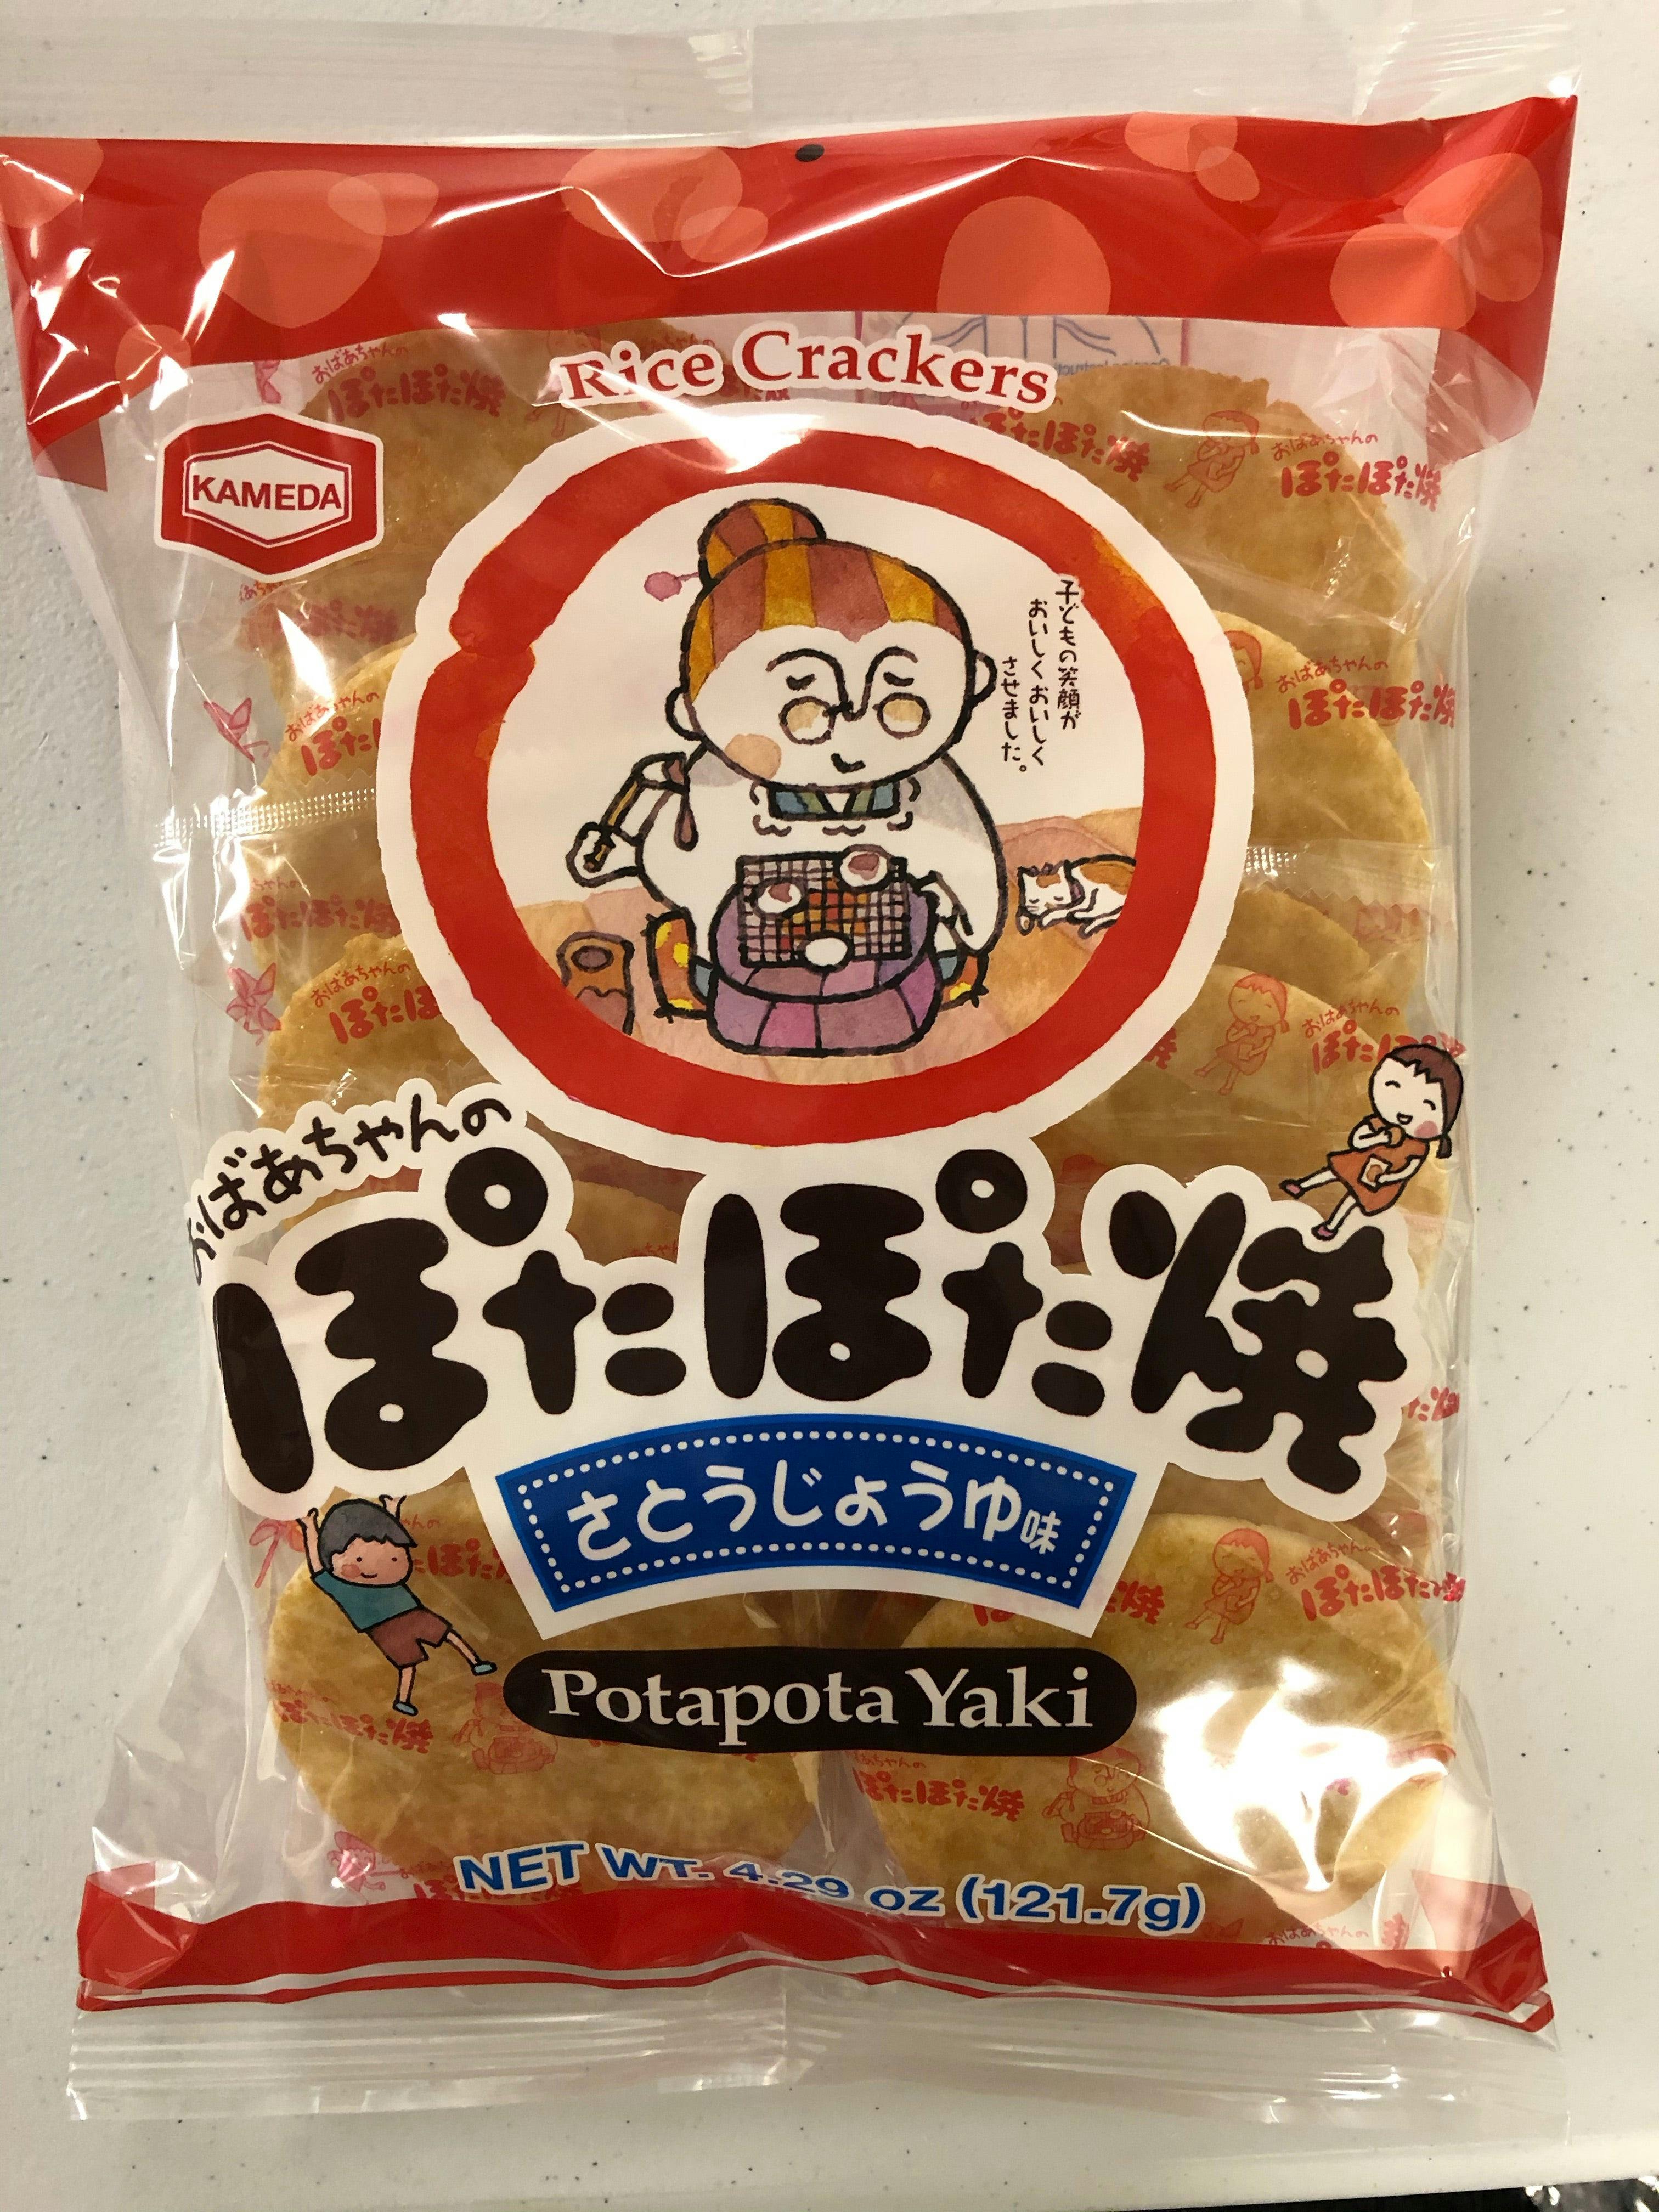 Kameda 无添加 米饼 potapota rice cracker 最著名的日本米饼